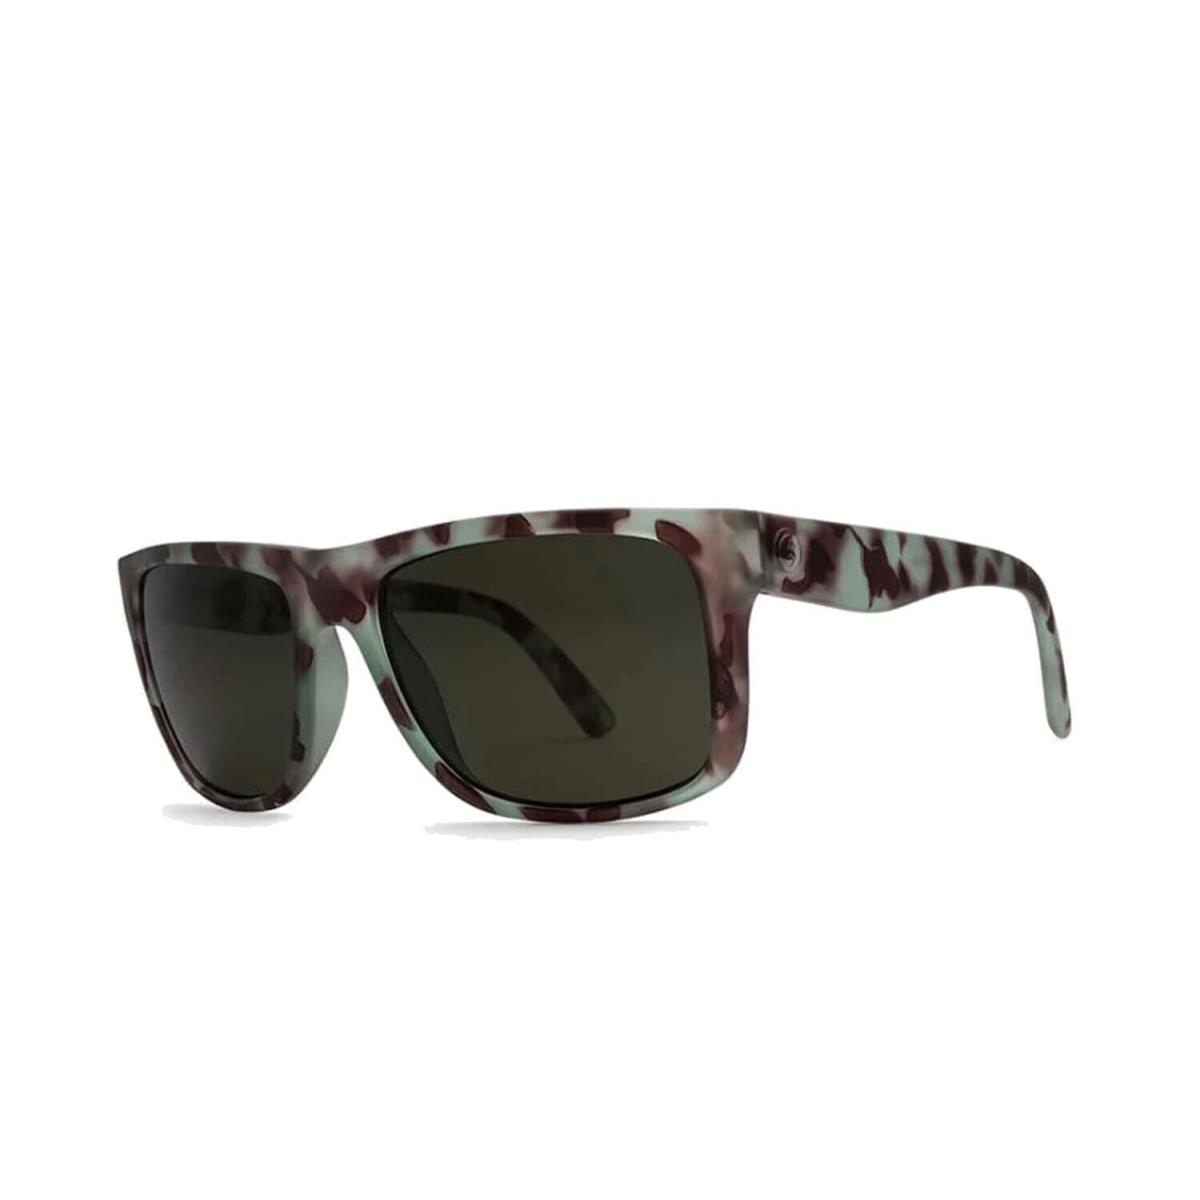 Electric Swingarm XL Sunglasses Gulf Tort with Grey Polarized Lens